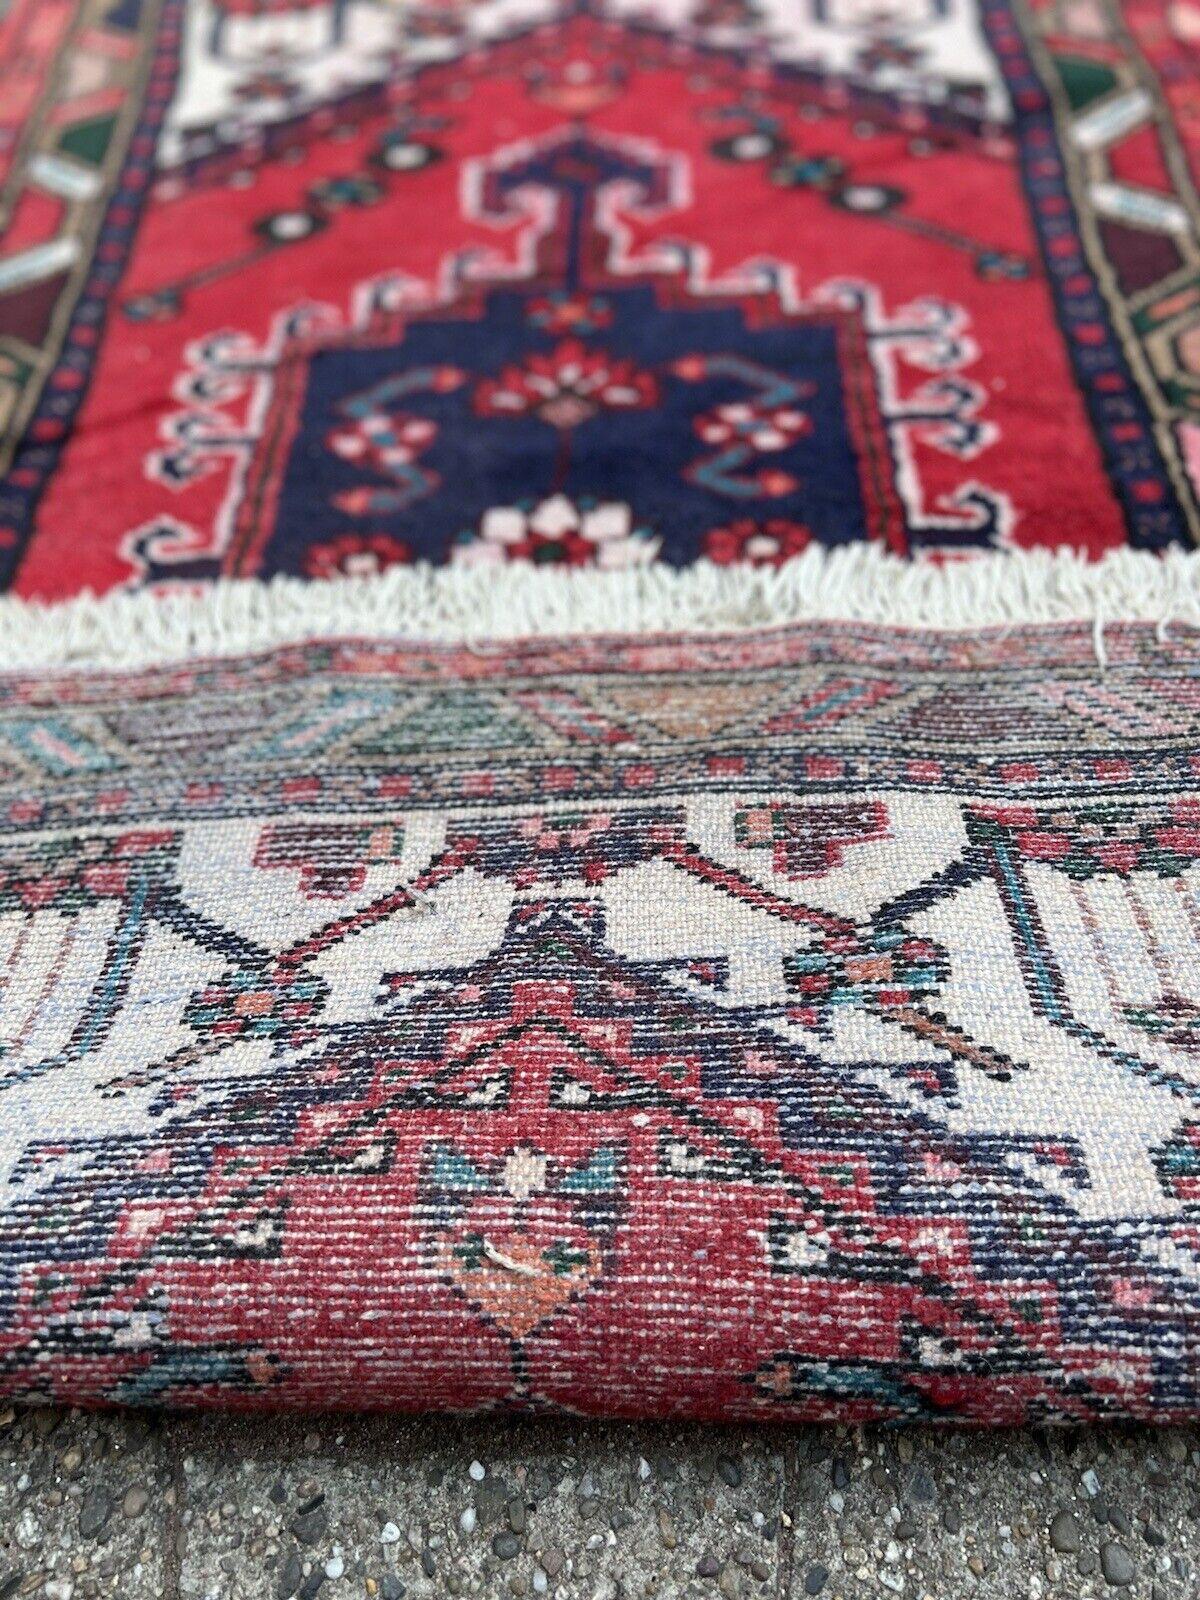 Handmade Vintage Persian Style Hamadan Rug 2.3' x 4', 1970s - 1S58 For Sale 4